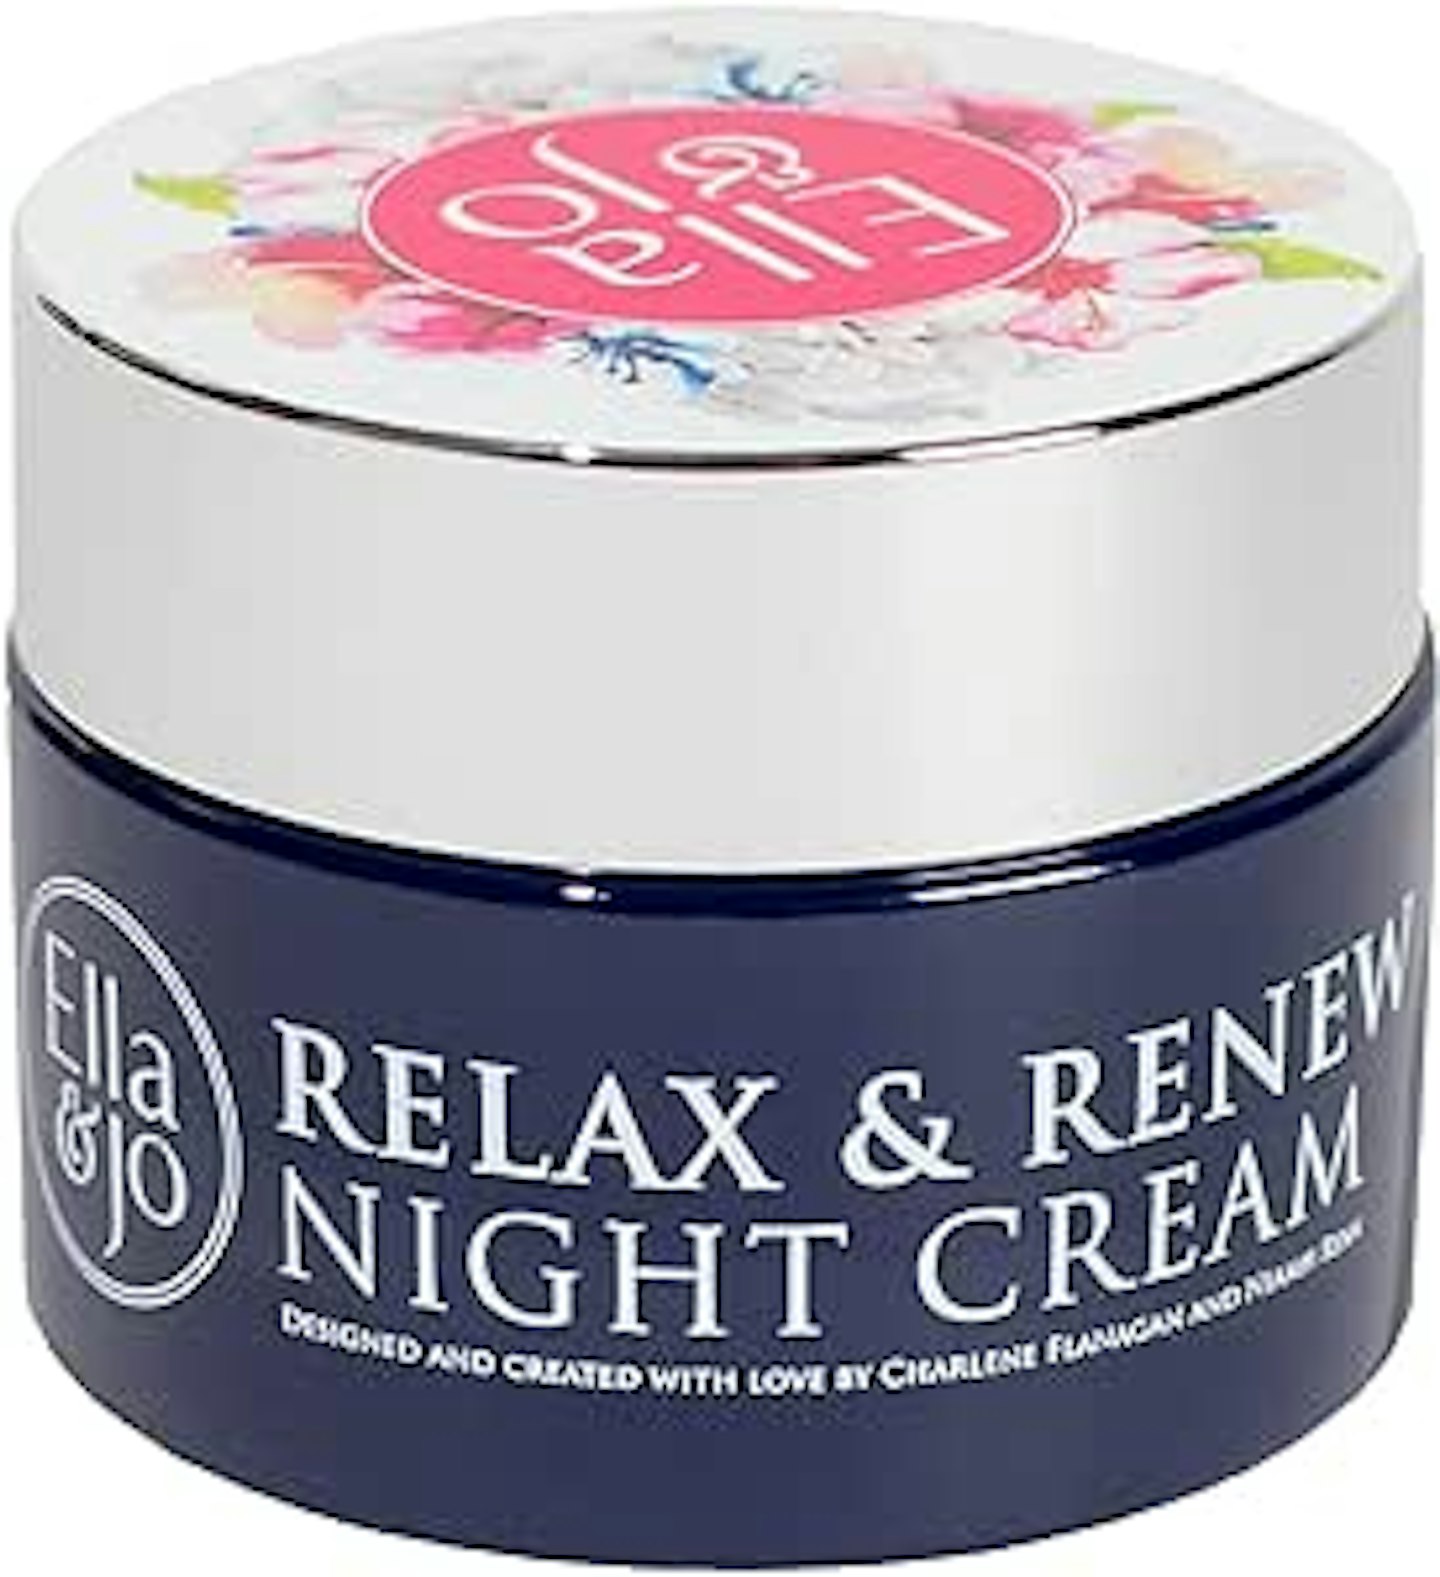 Ella and Jo Relax & Renew Night Cream